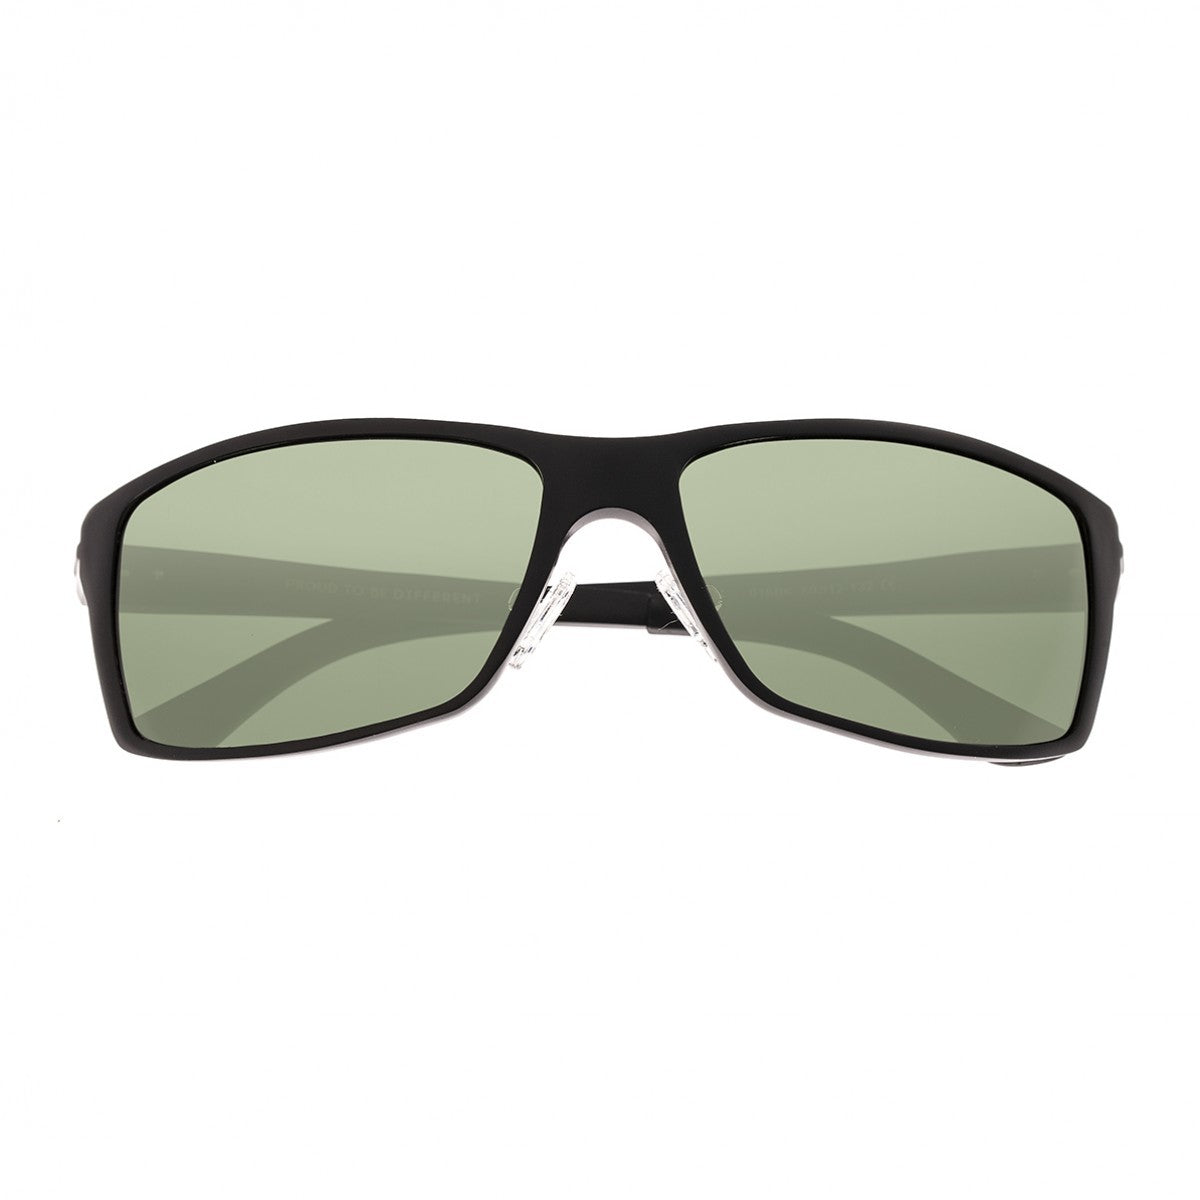 Breed Kaskade Aluminium Polarized Sunglasses - Black/Black - BSG016BK